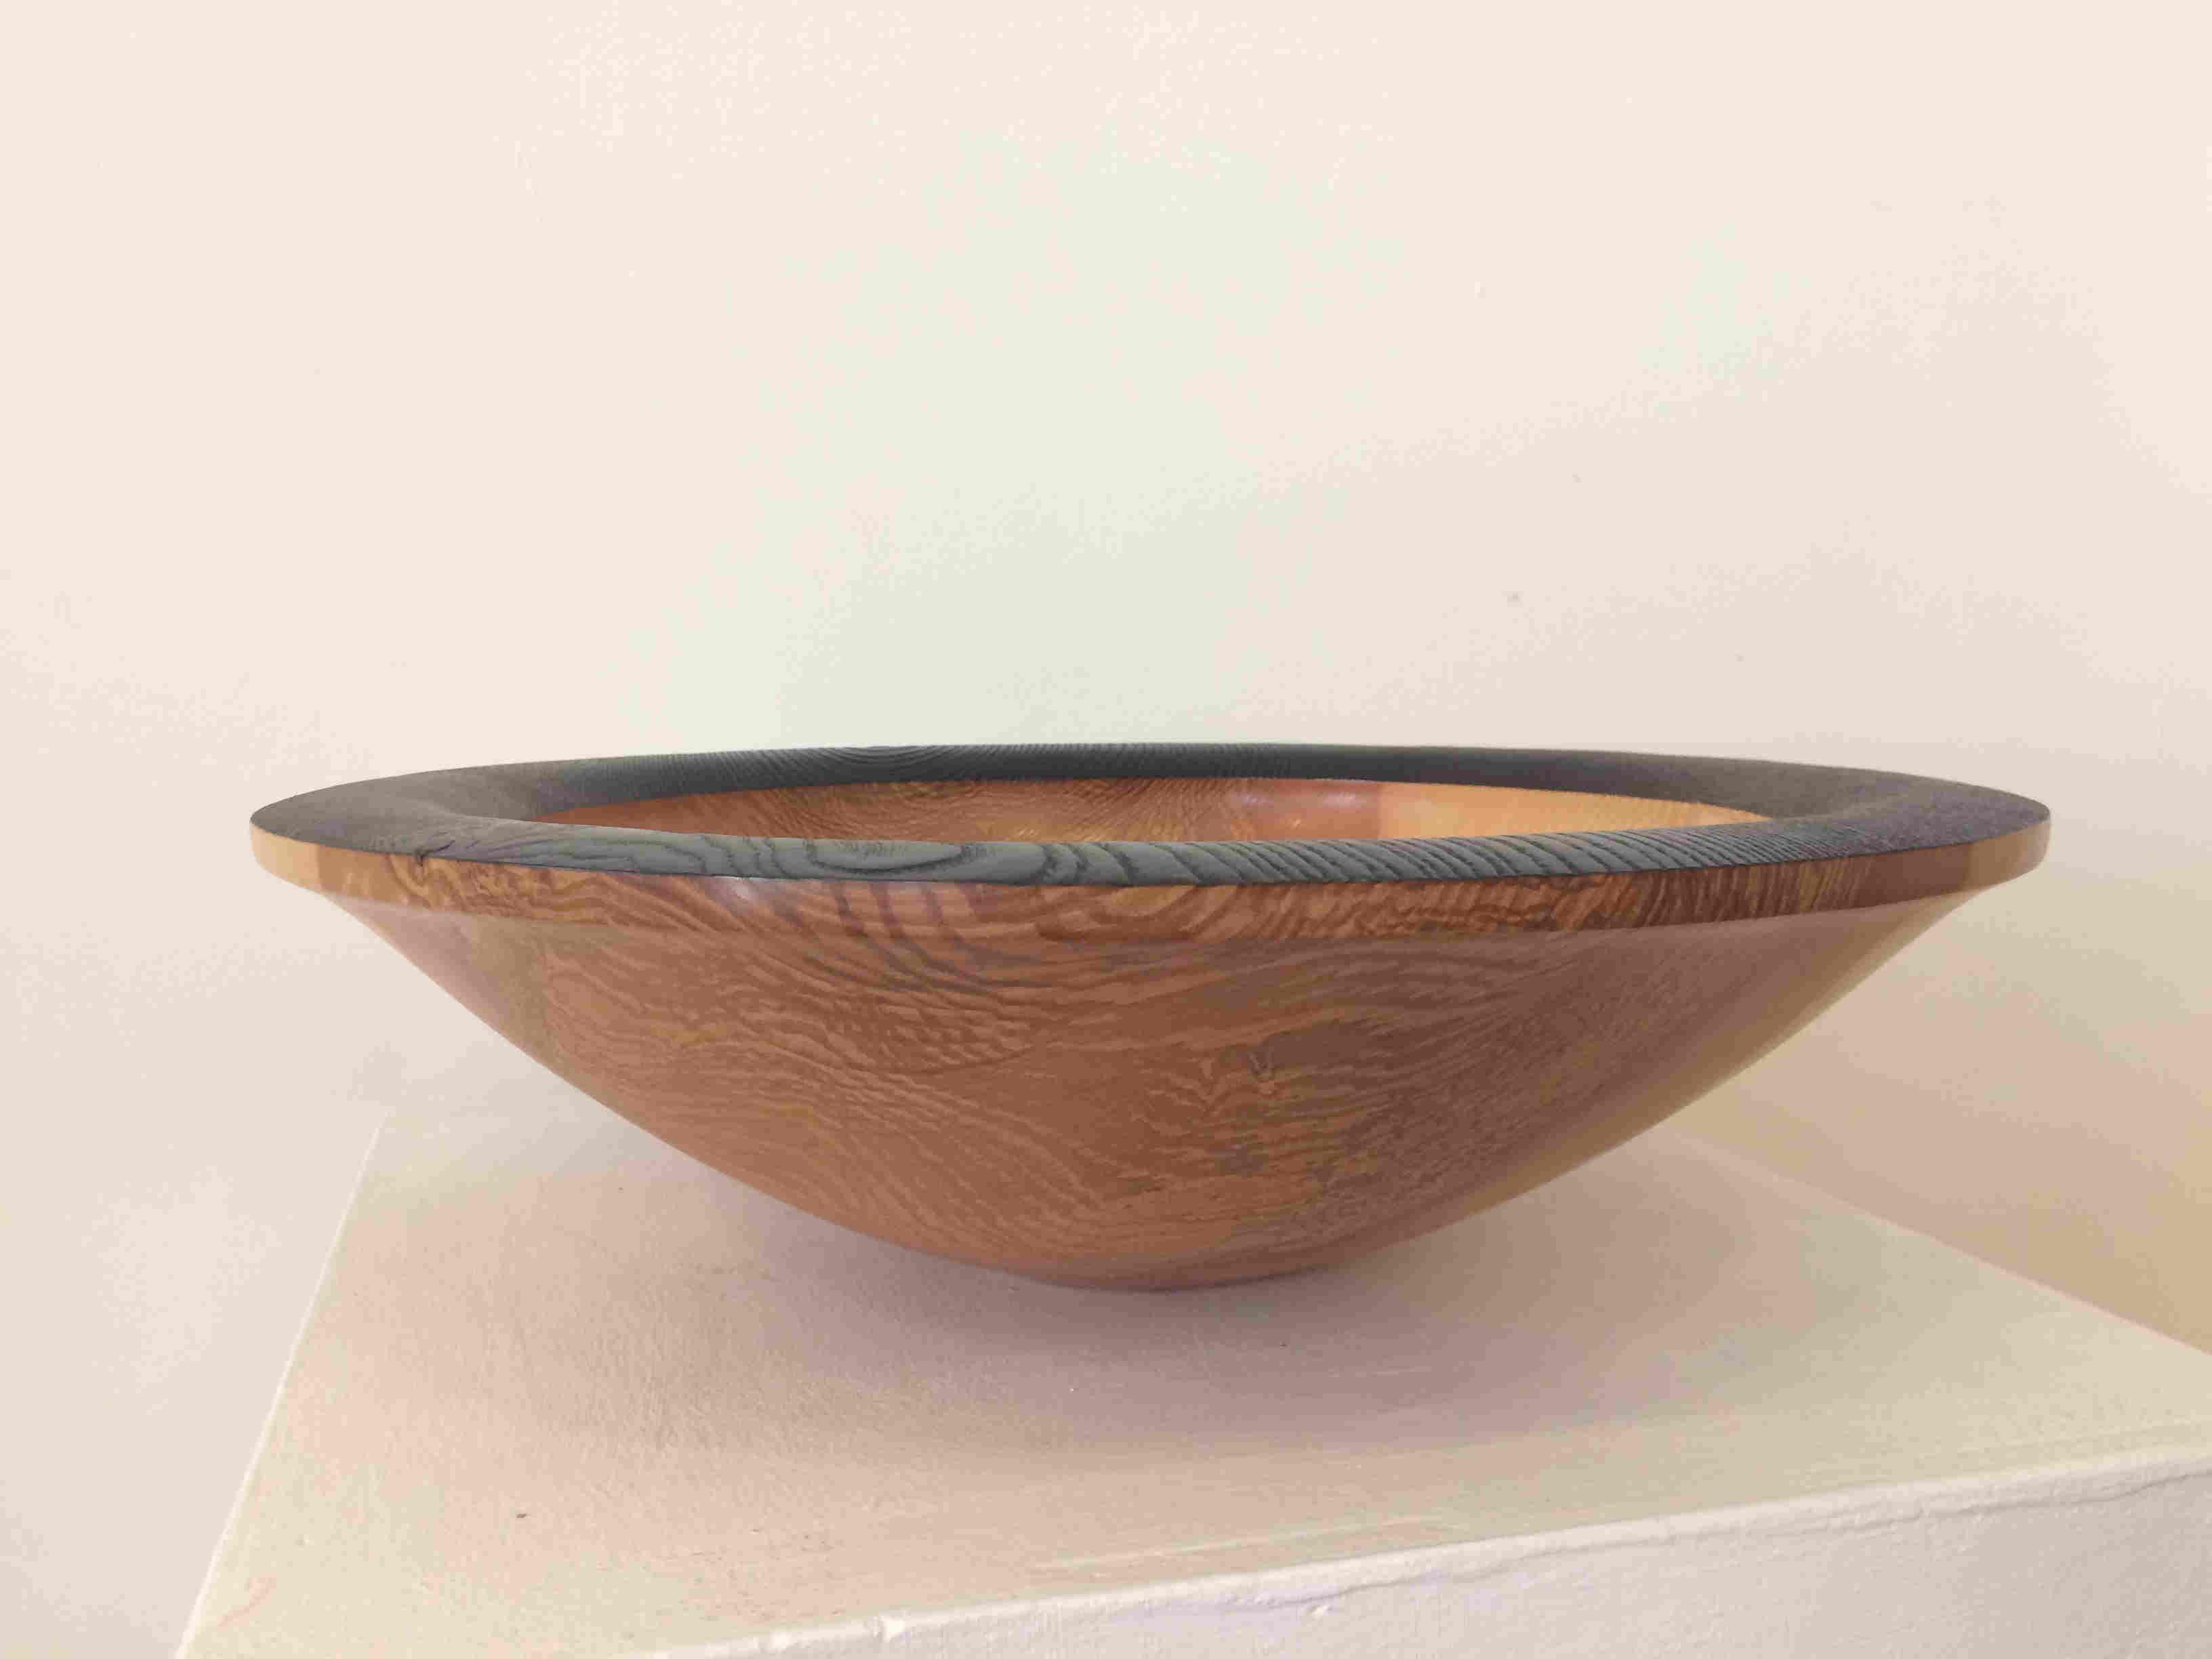 'Olive Ash Bowl, small black rim' by artist Angus Clyne